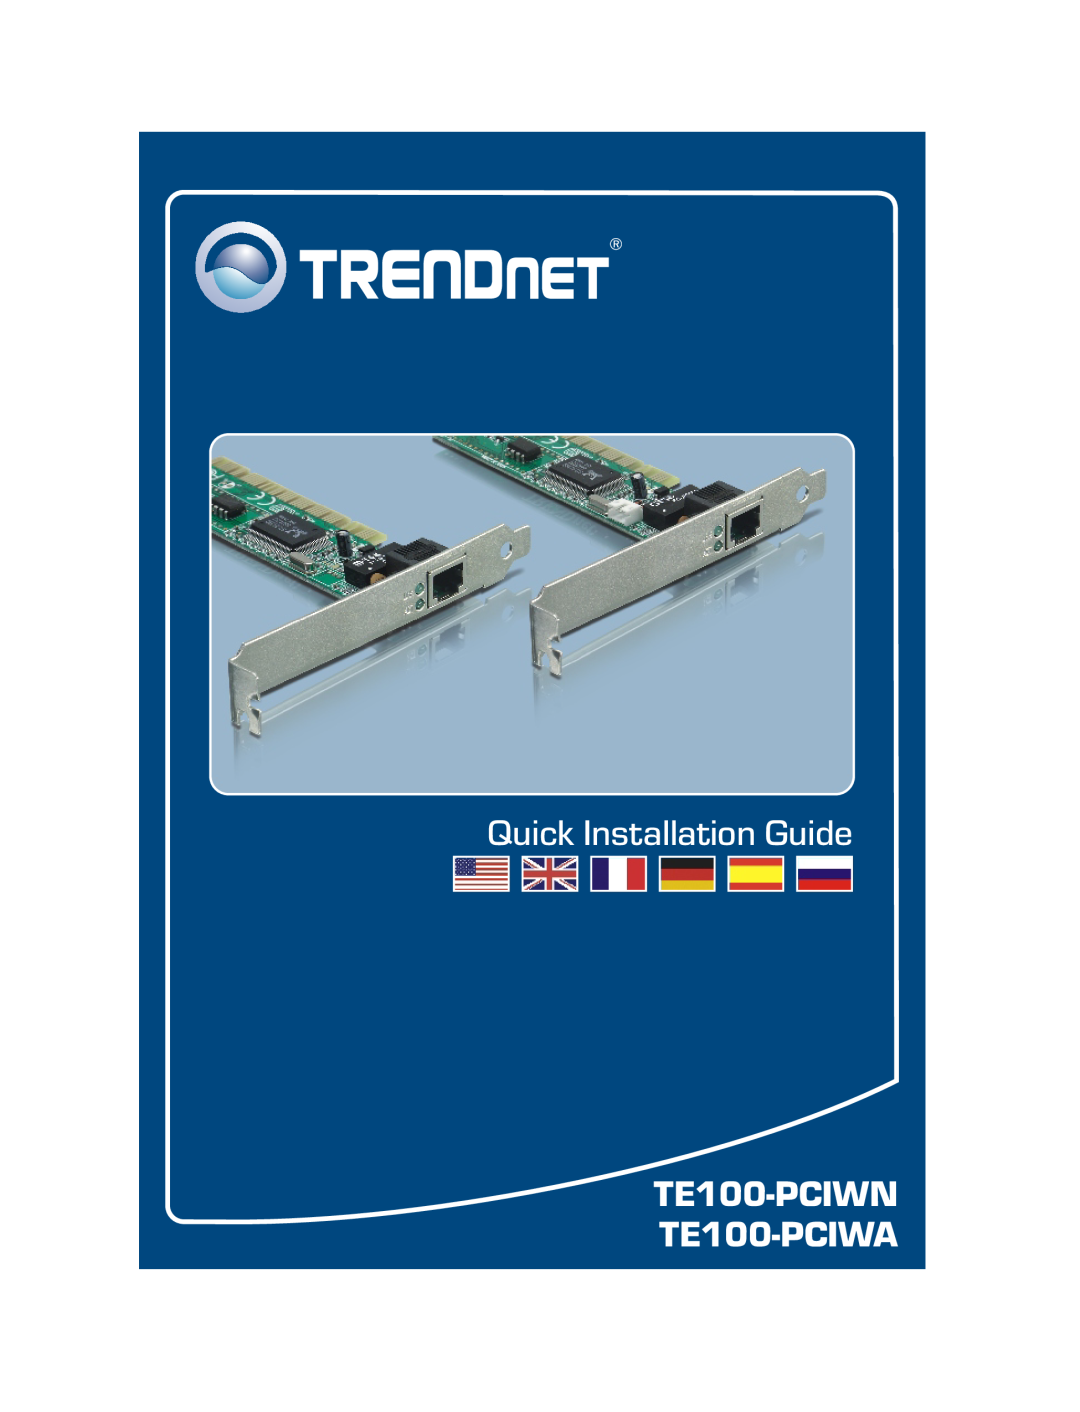 TRENDnet manual Quick Installation Guide, TE100-PCIWN TE100-PCIWA 